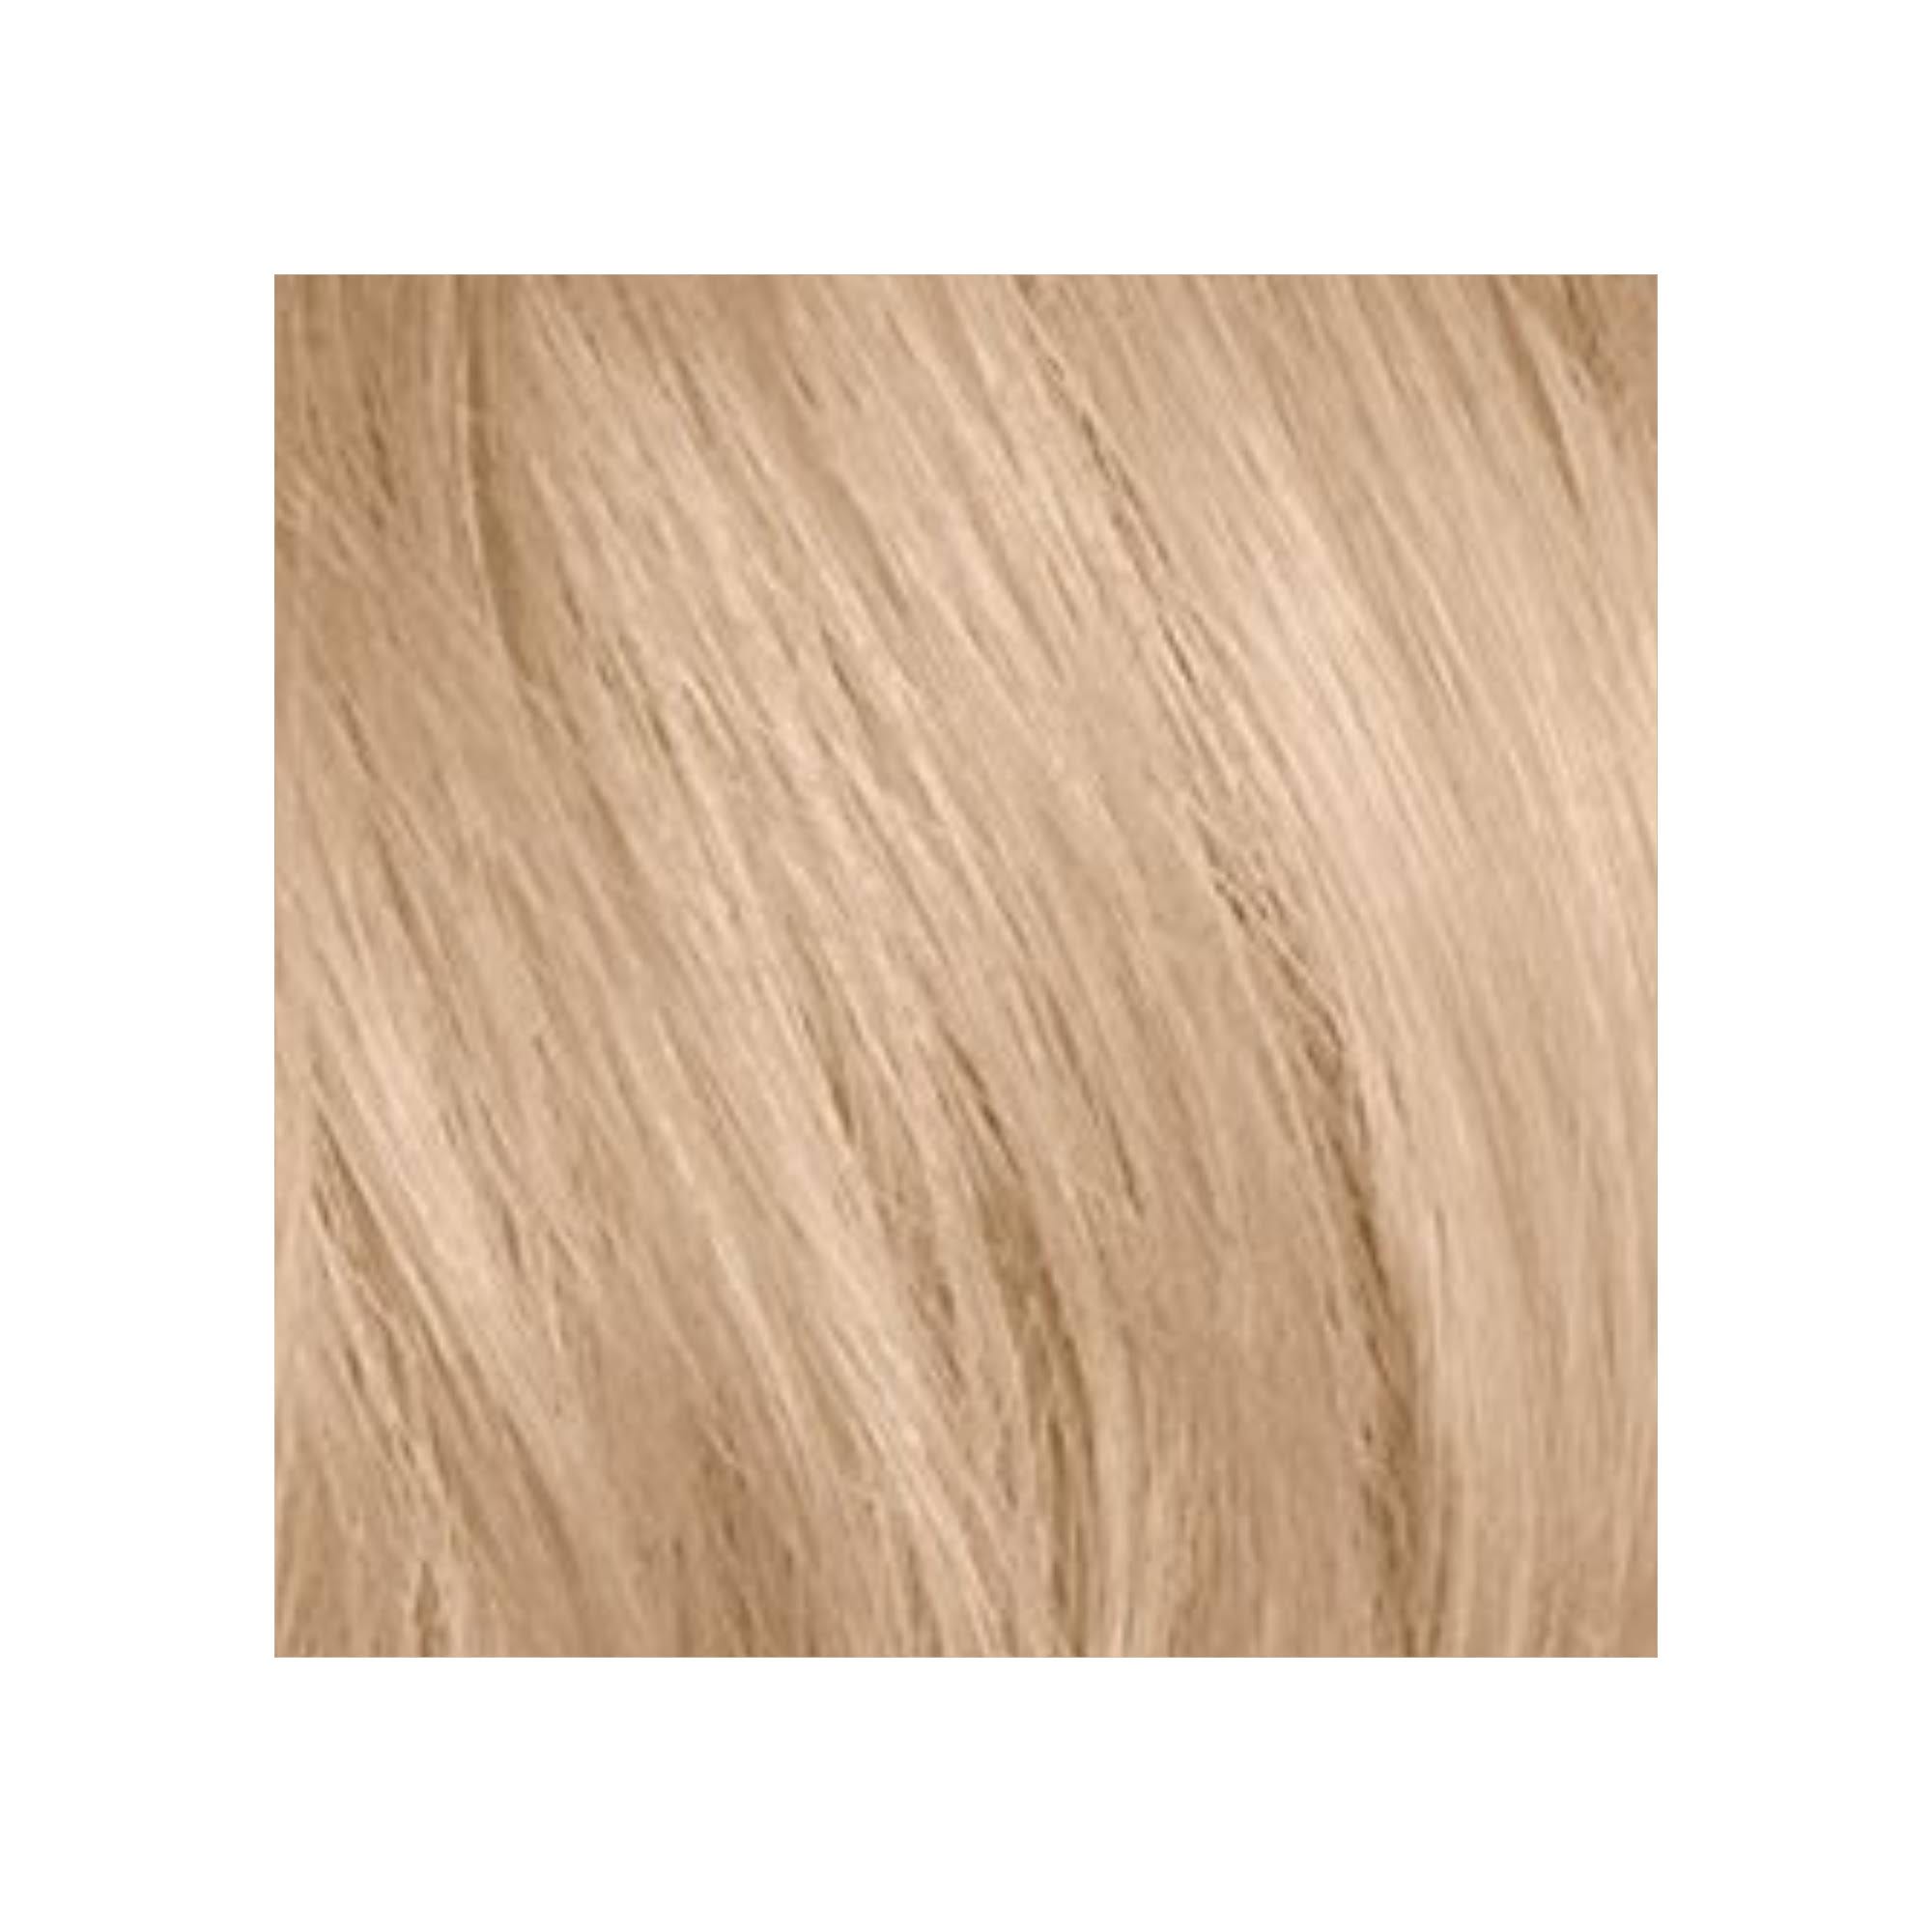 Revlon Color 60 G Hair Dye in Shade 9 | Image